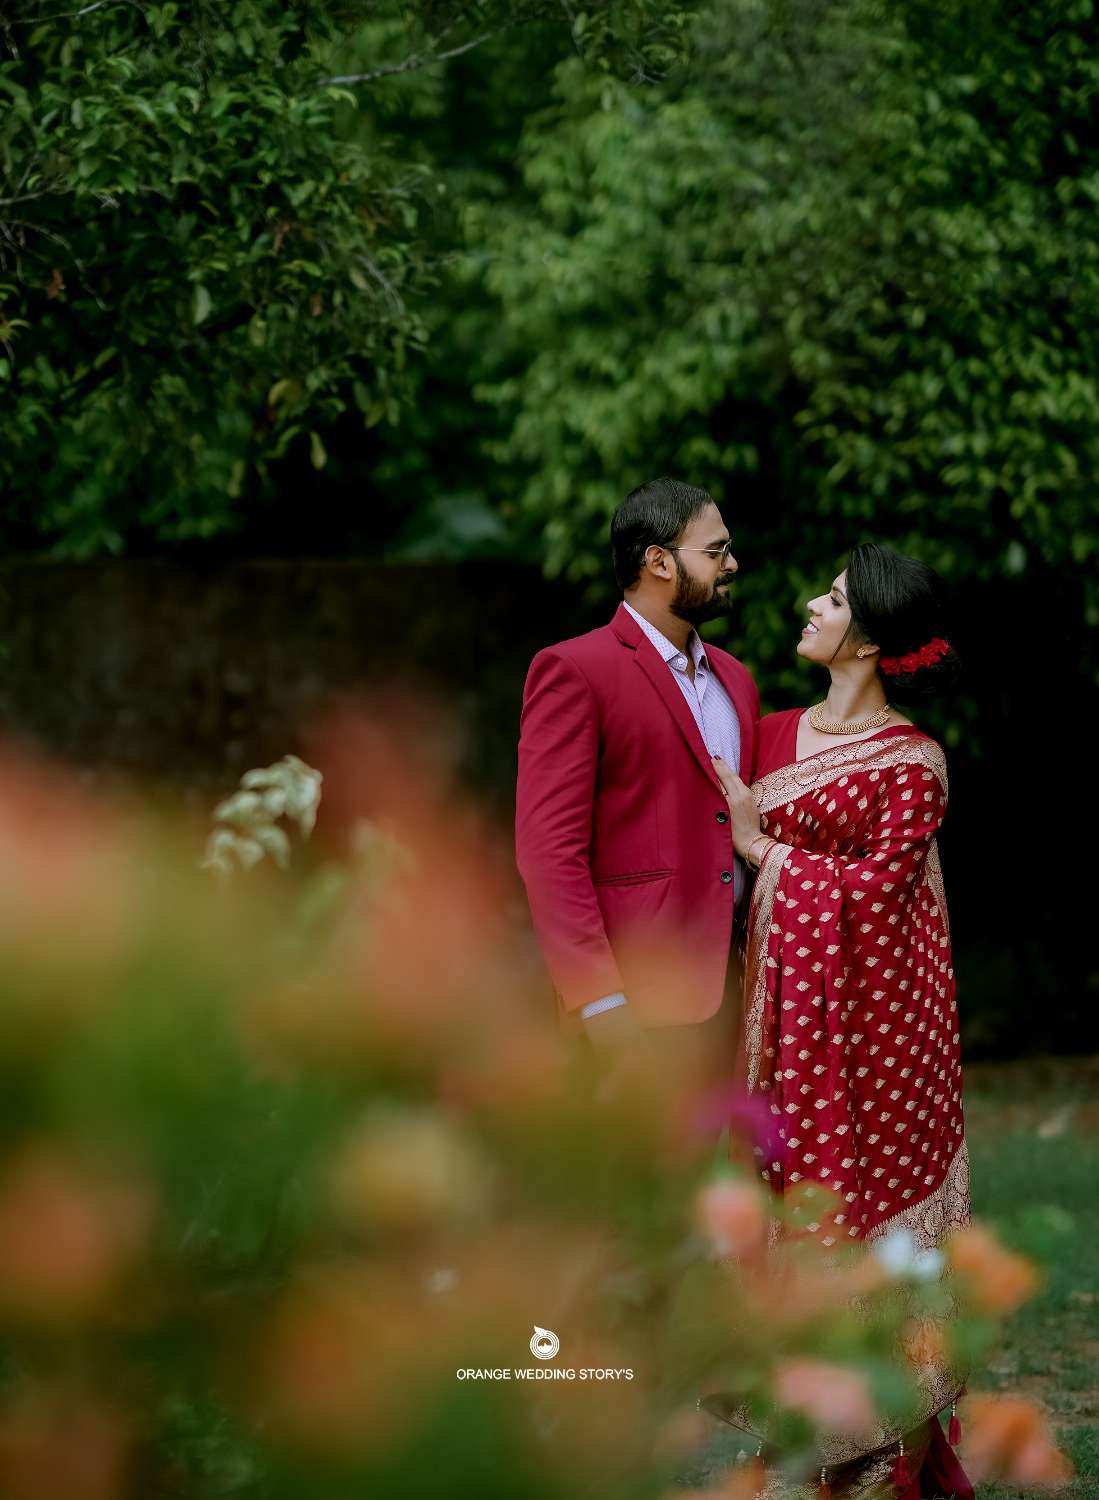 Pin by syamanoj on kerala bride | Indian wedding photography couples, Kerala  wedding photography, Wedding photoshoot poses